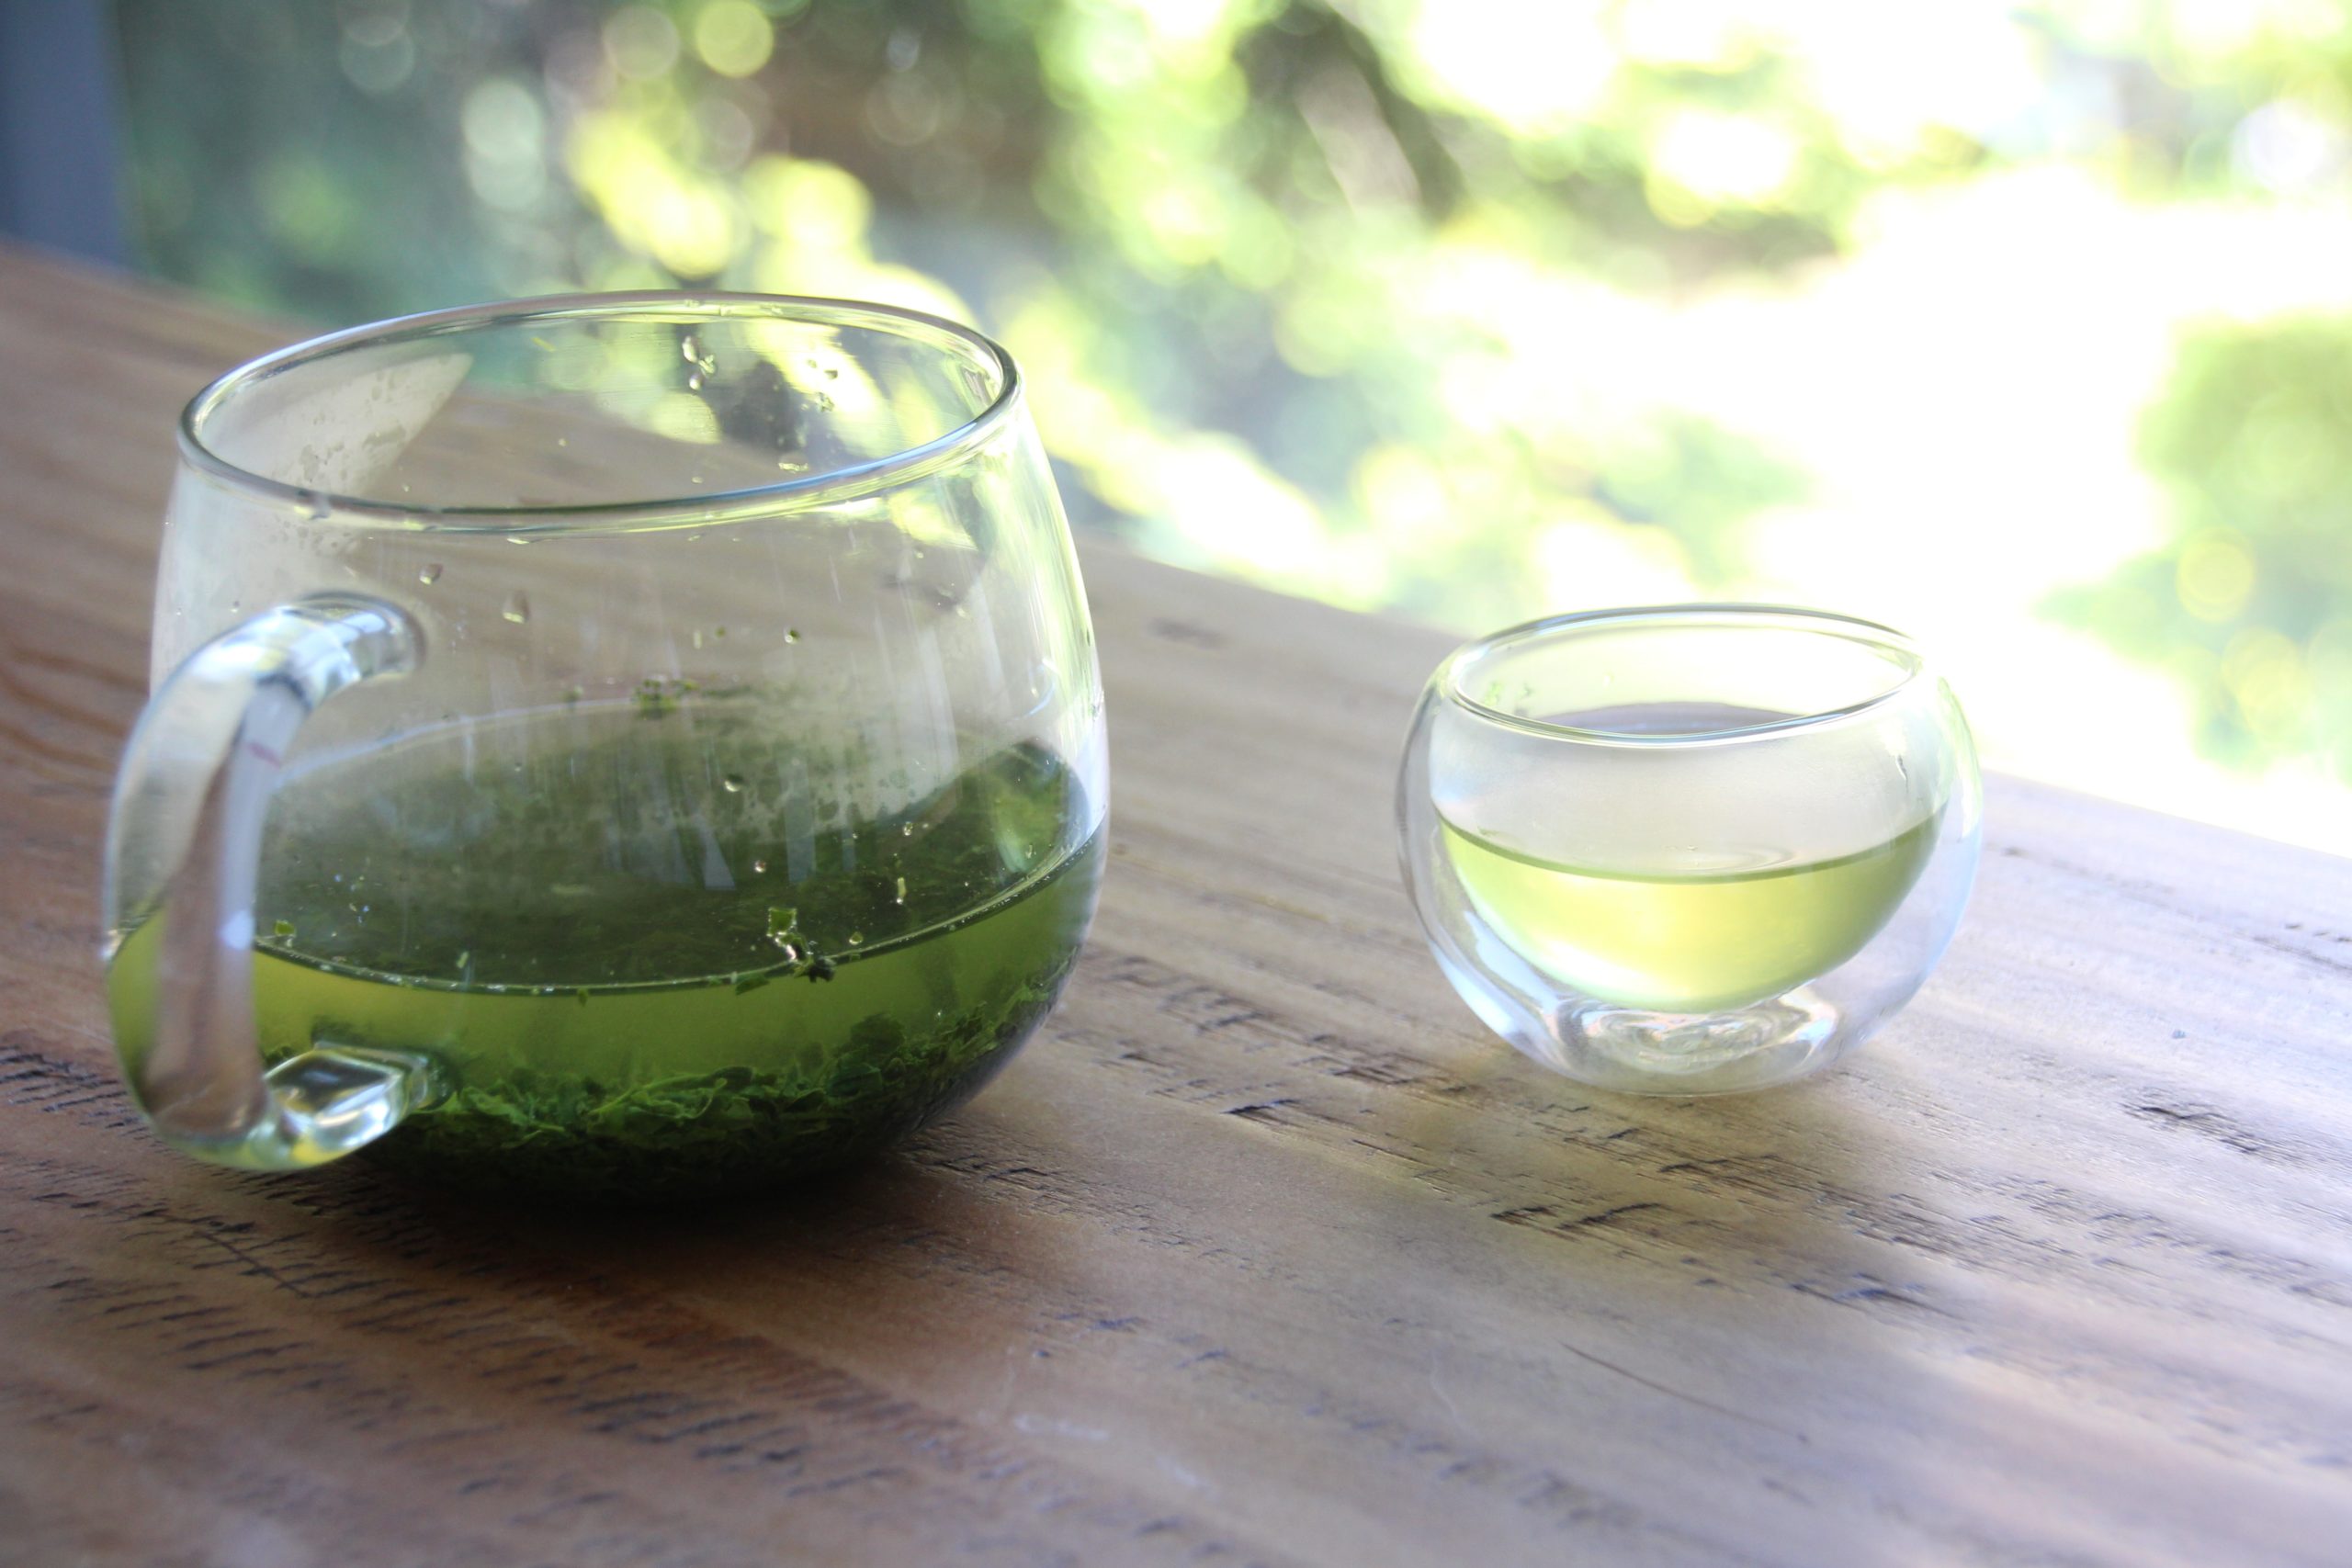 Green tea Shizuoka Sencha Kura